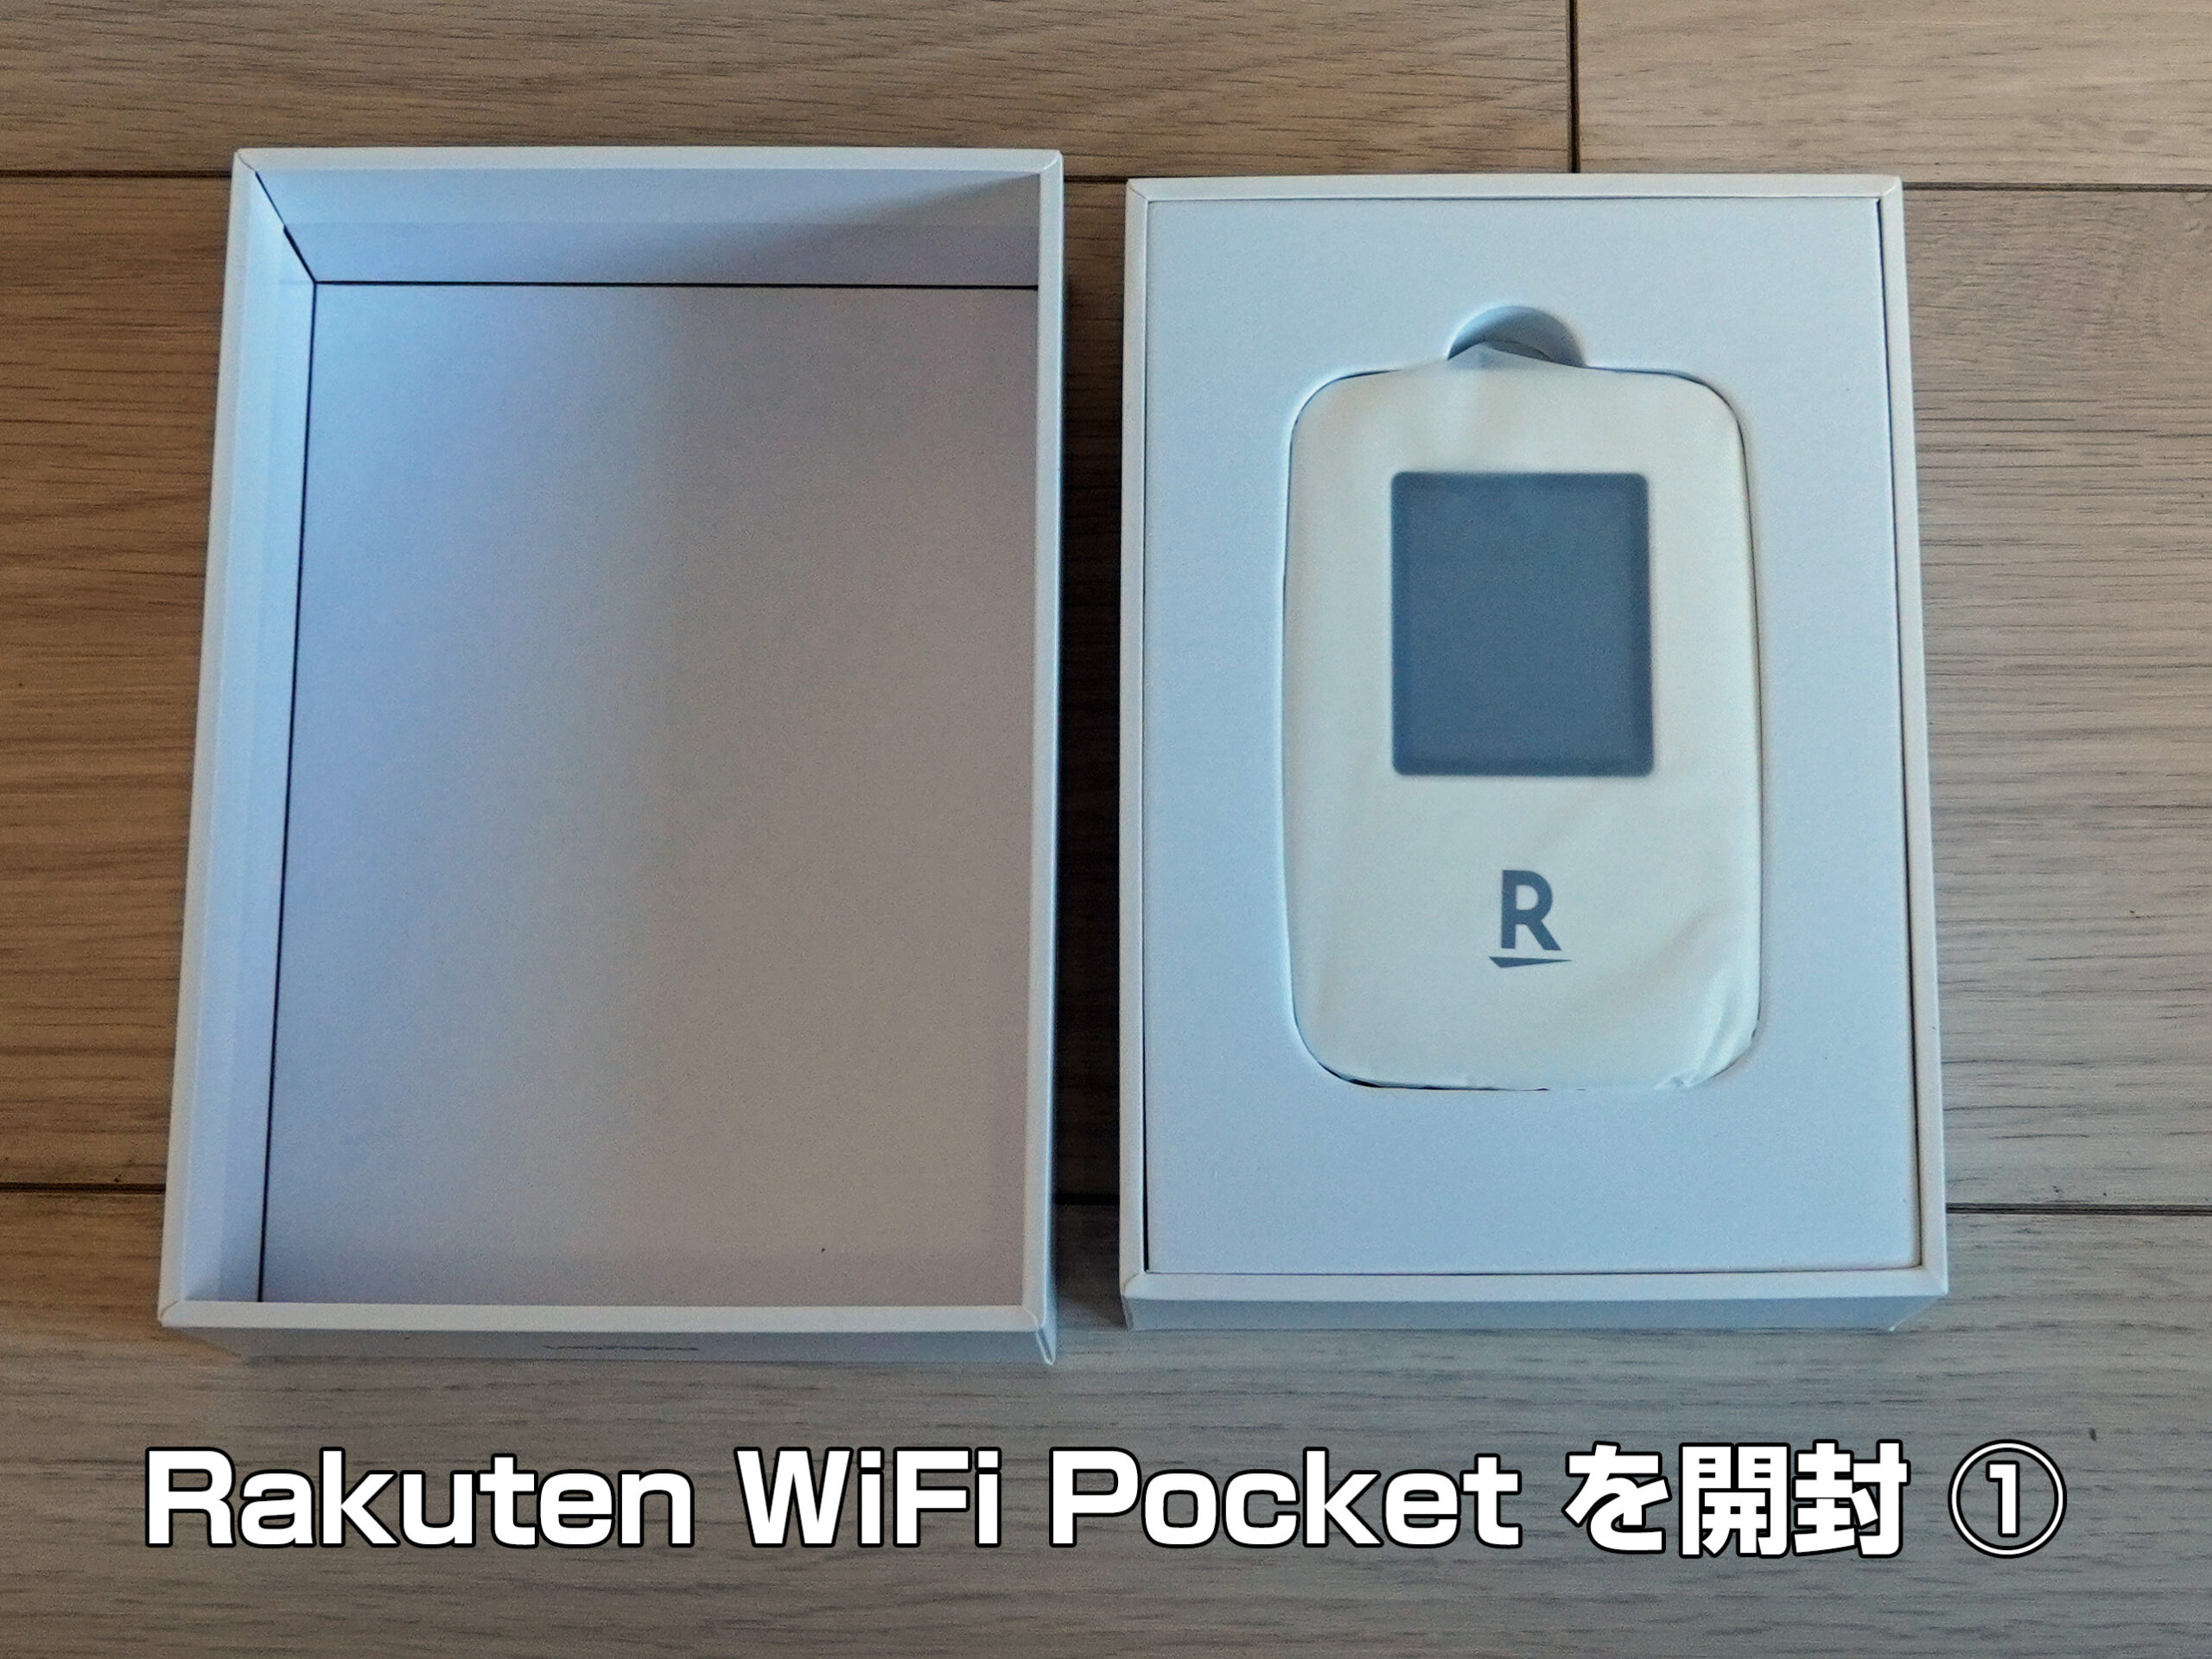 「Rakuten WiFi Pocket」 本体が入っている梱包